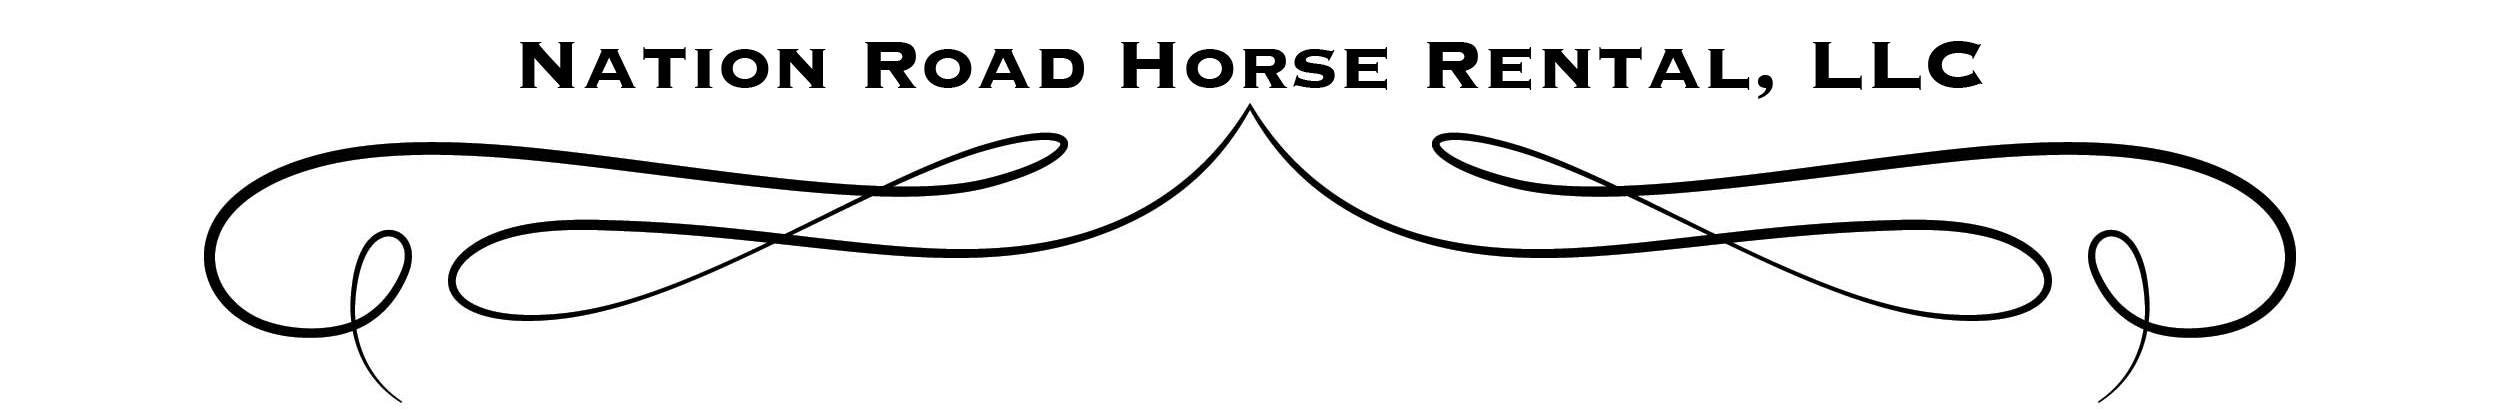 Nation Road Horse Rental, LLC